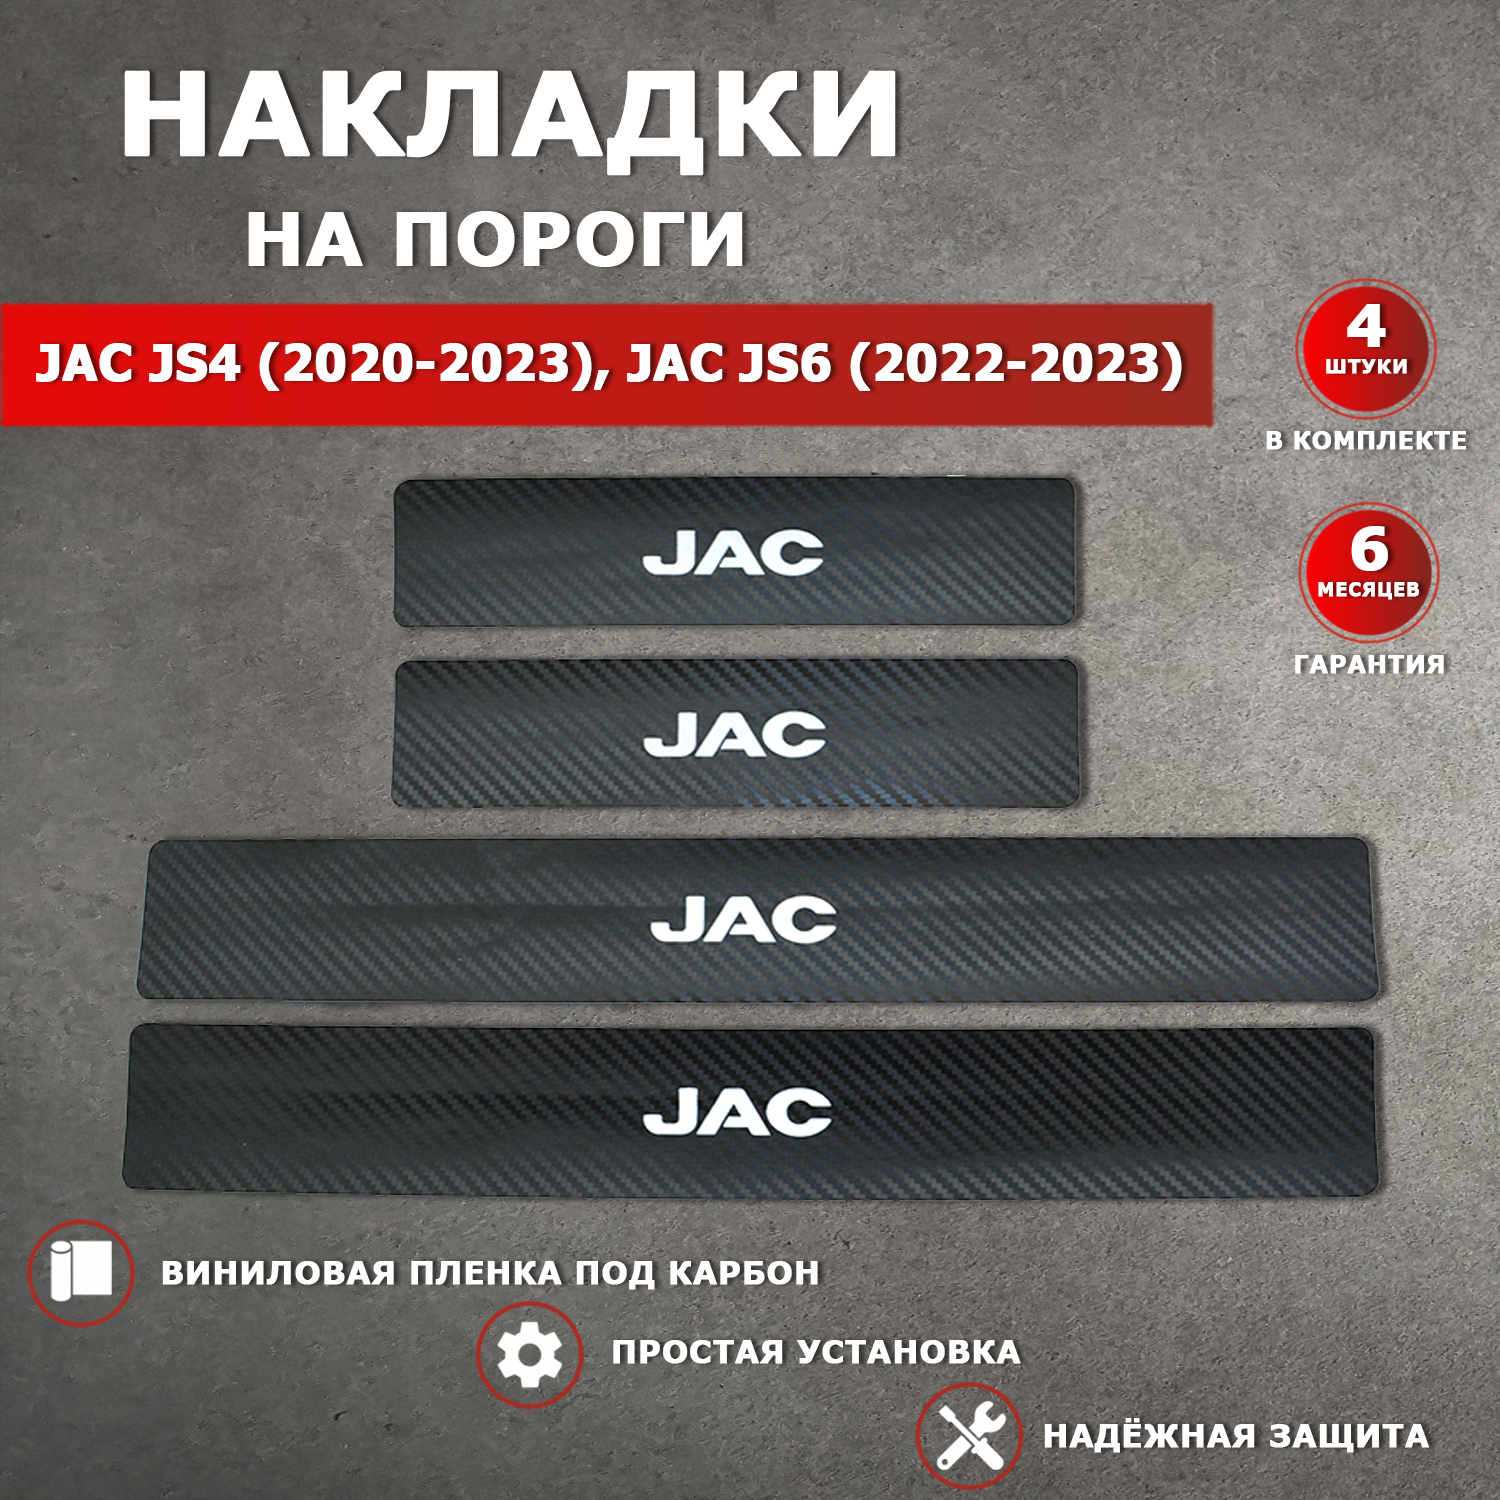 Накладки на пороги карбон черный Джак JS4 / JAC JS4 (2020-2023) Джак JS6 / JAC JS6 (2022-2023) надпись JAC